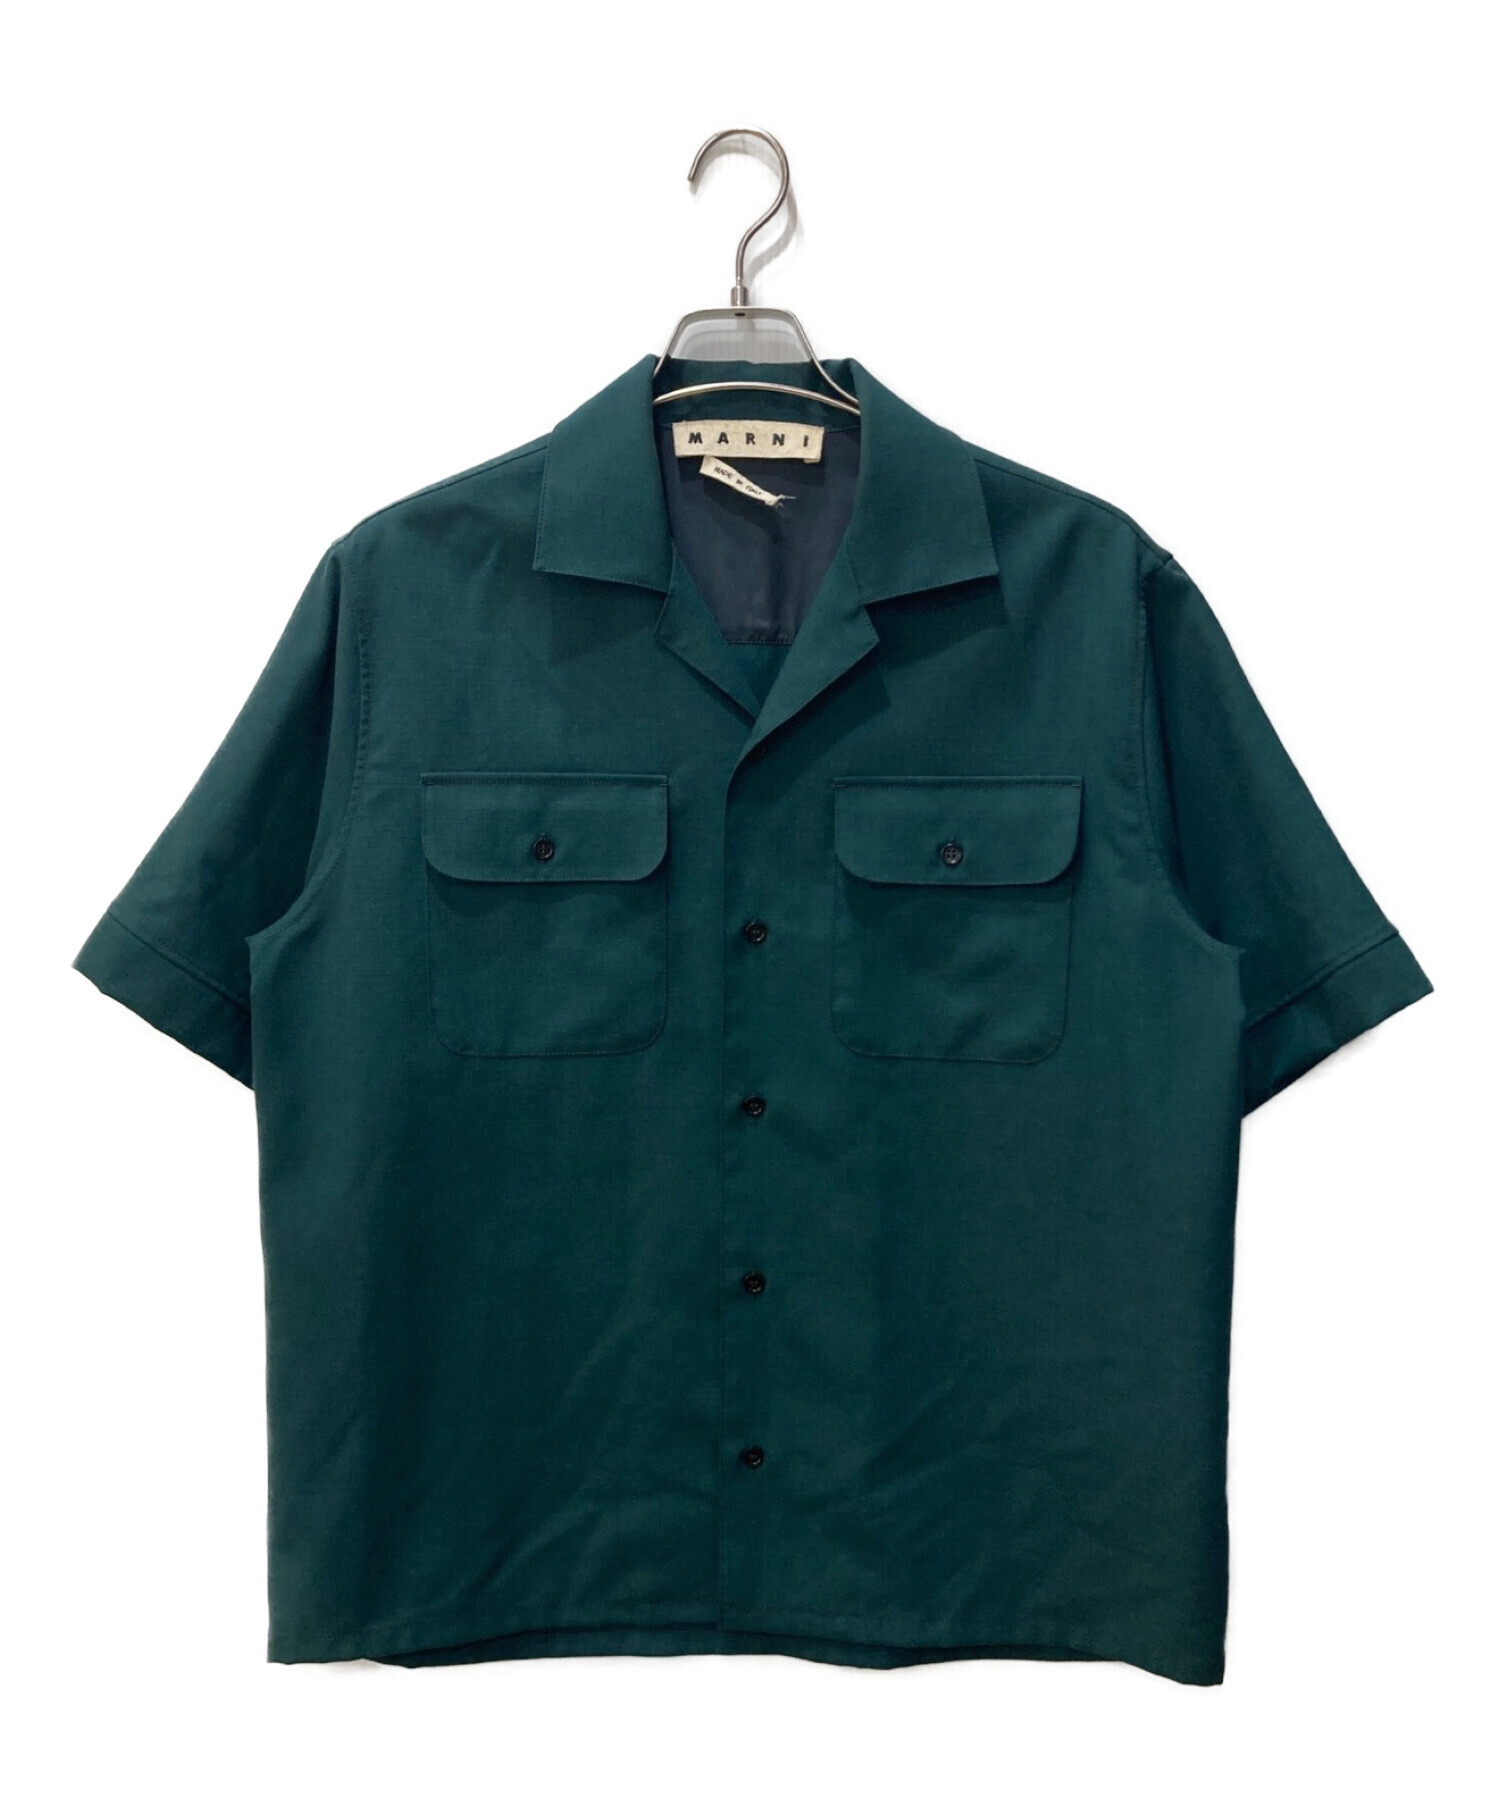 MARNI (マルニ) トロピカルウール開襟シャツ グリーン サイズ:46